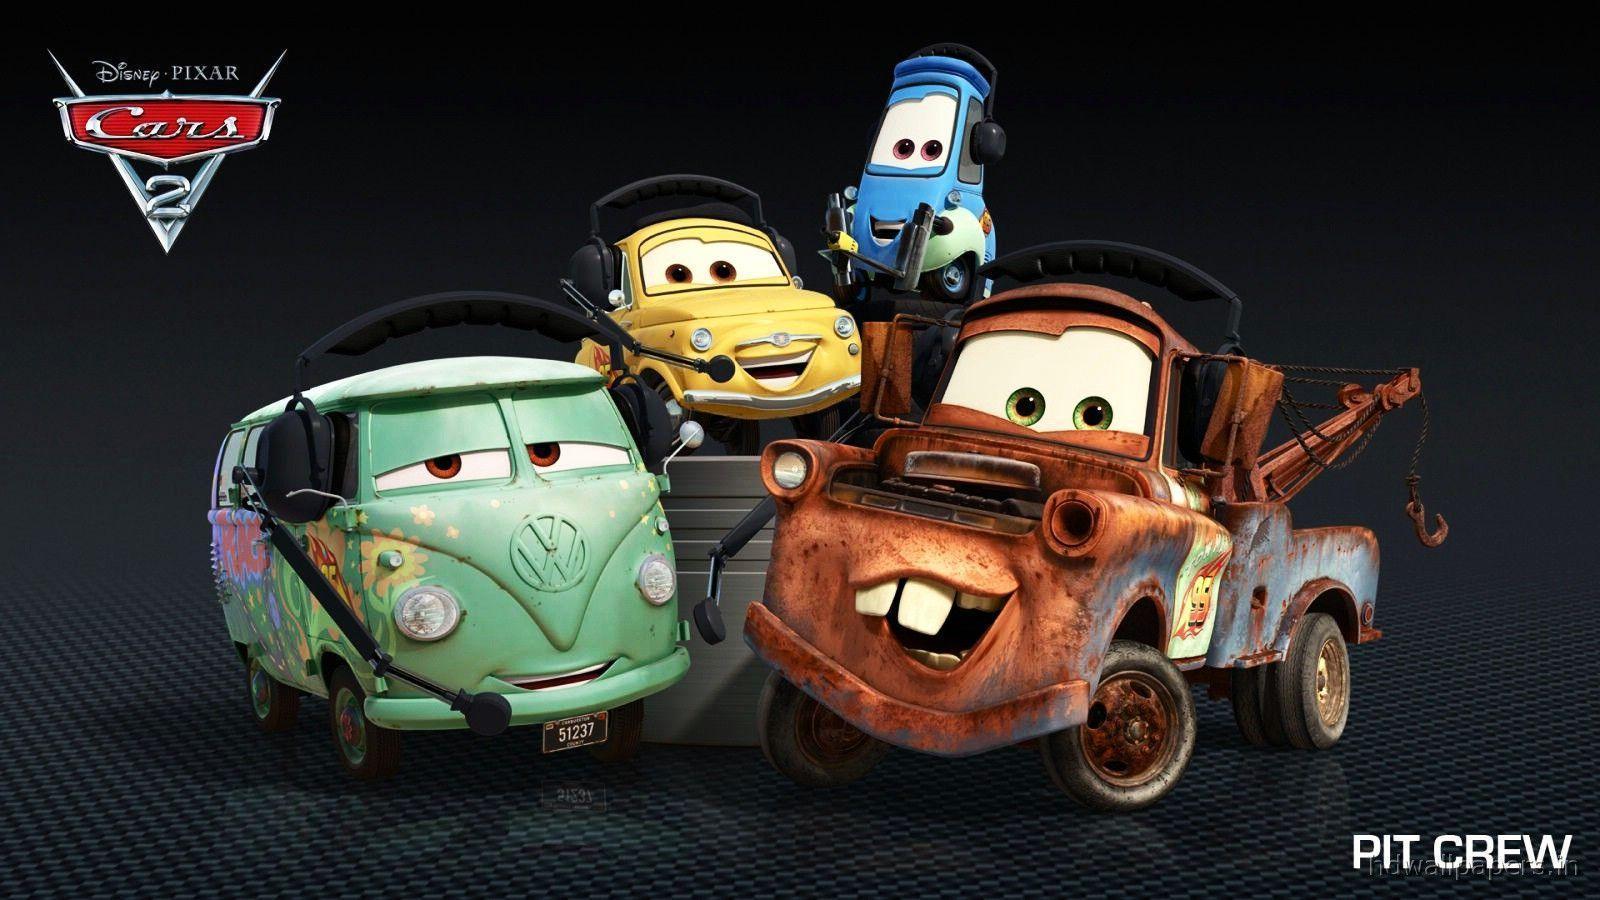 Disney Pixar Cars - Cars 2 HD wallpaper and background photo